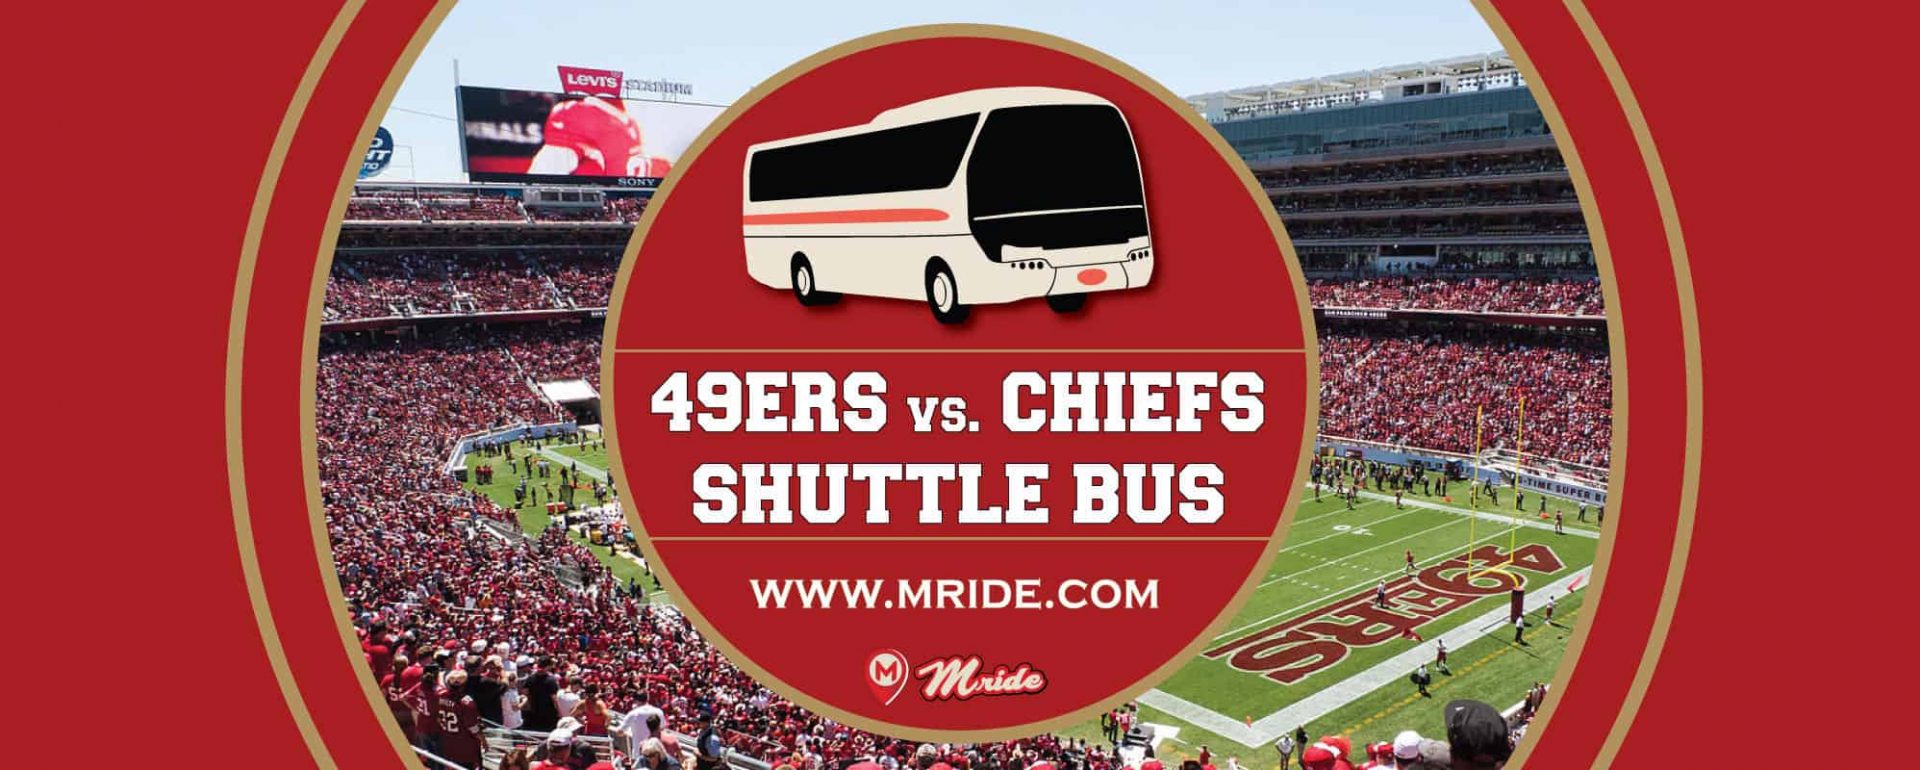 49ers vs. Chiefs Shuttle Bus